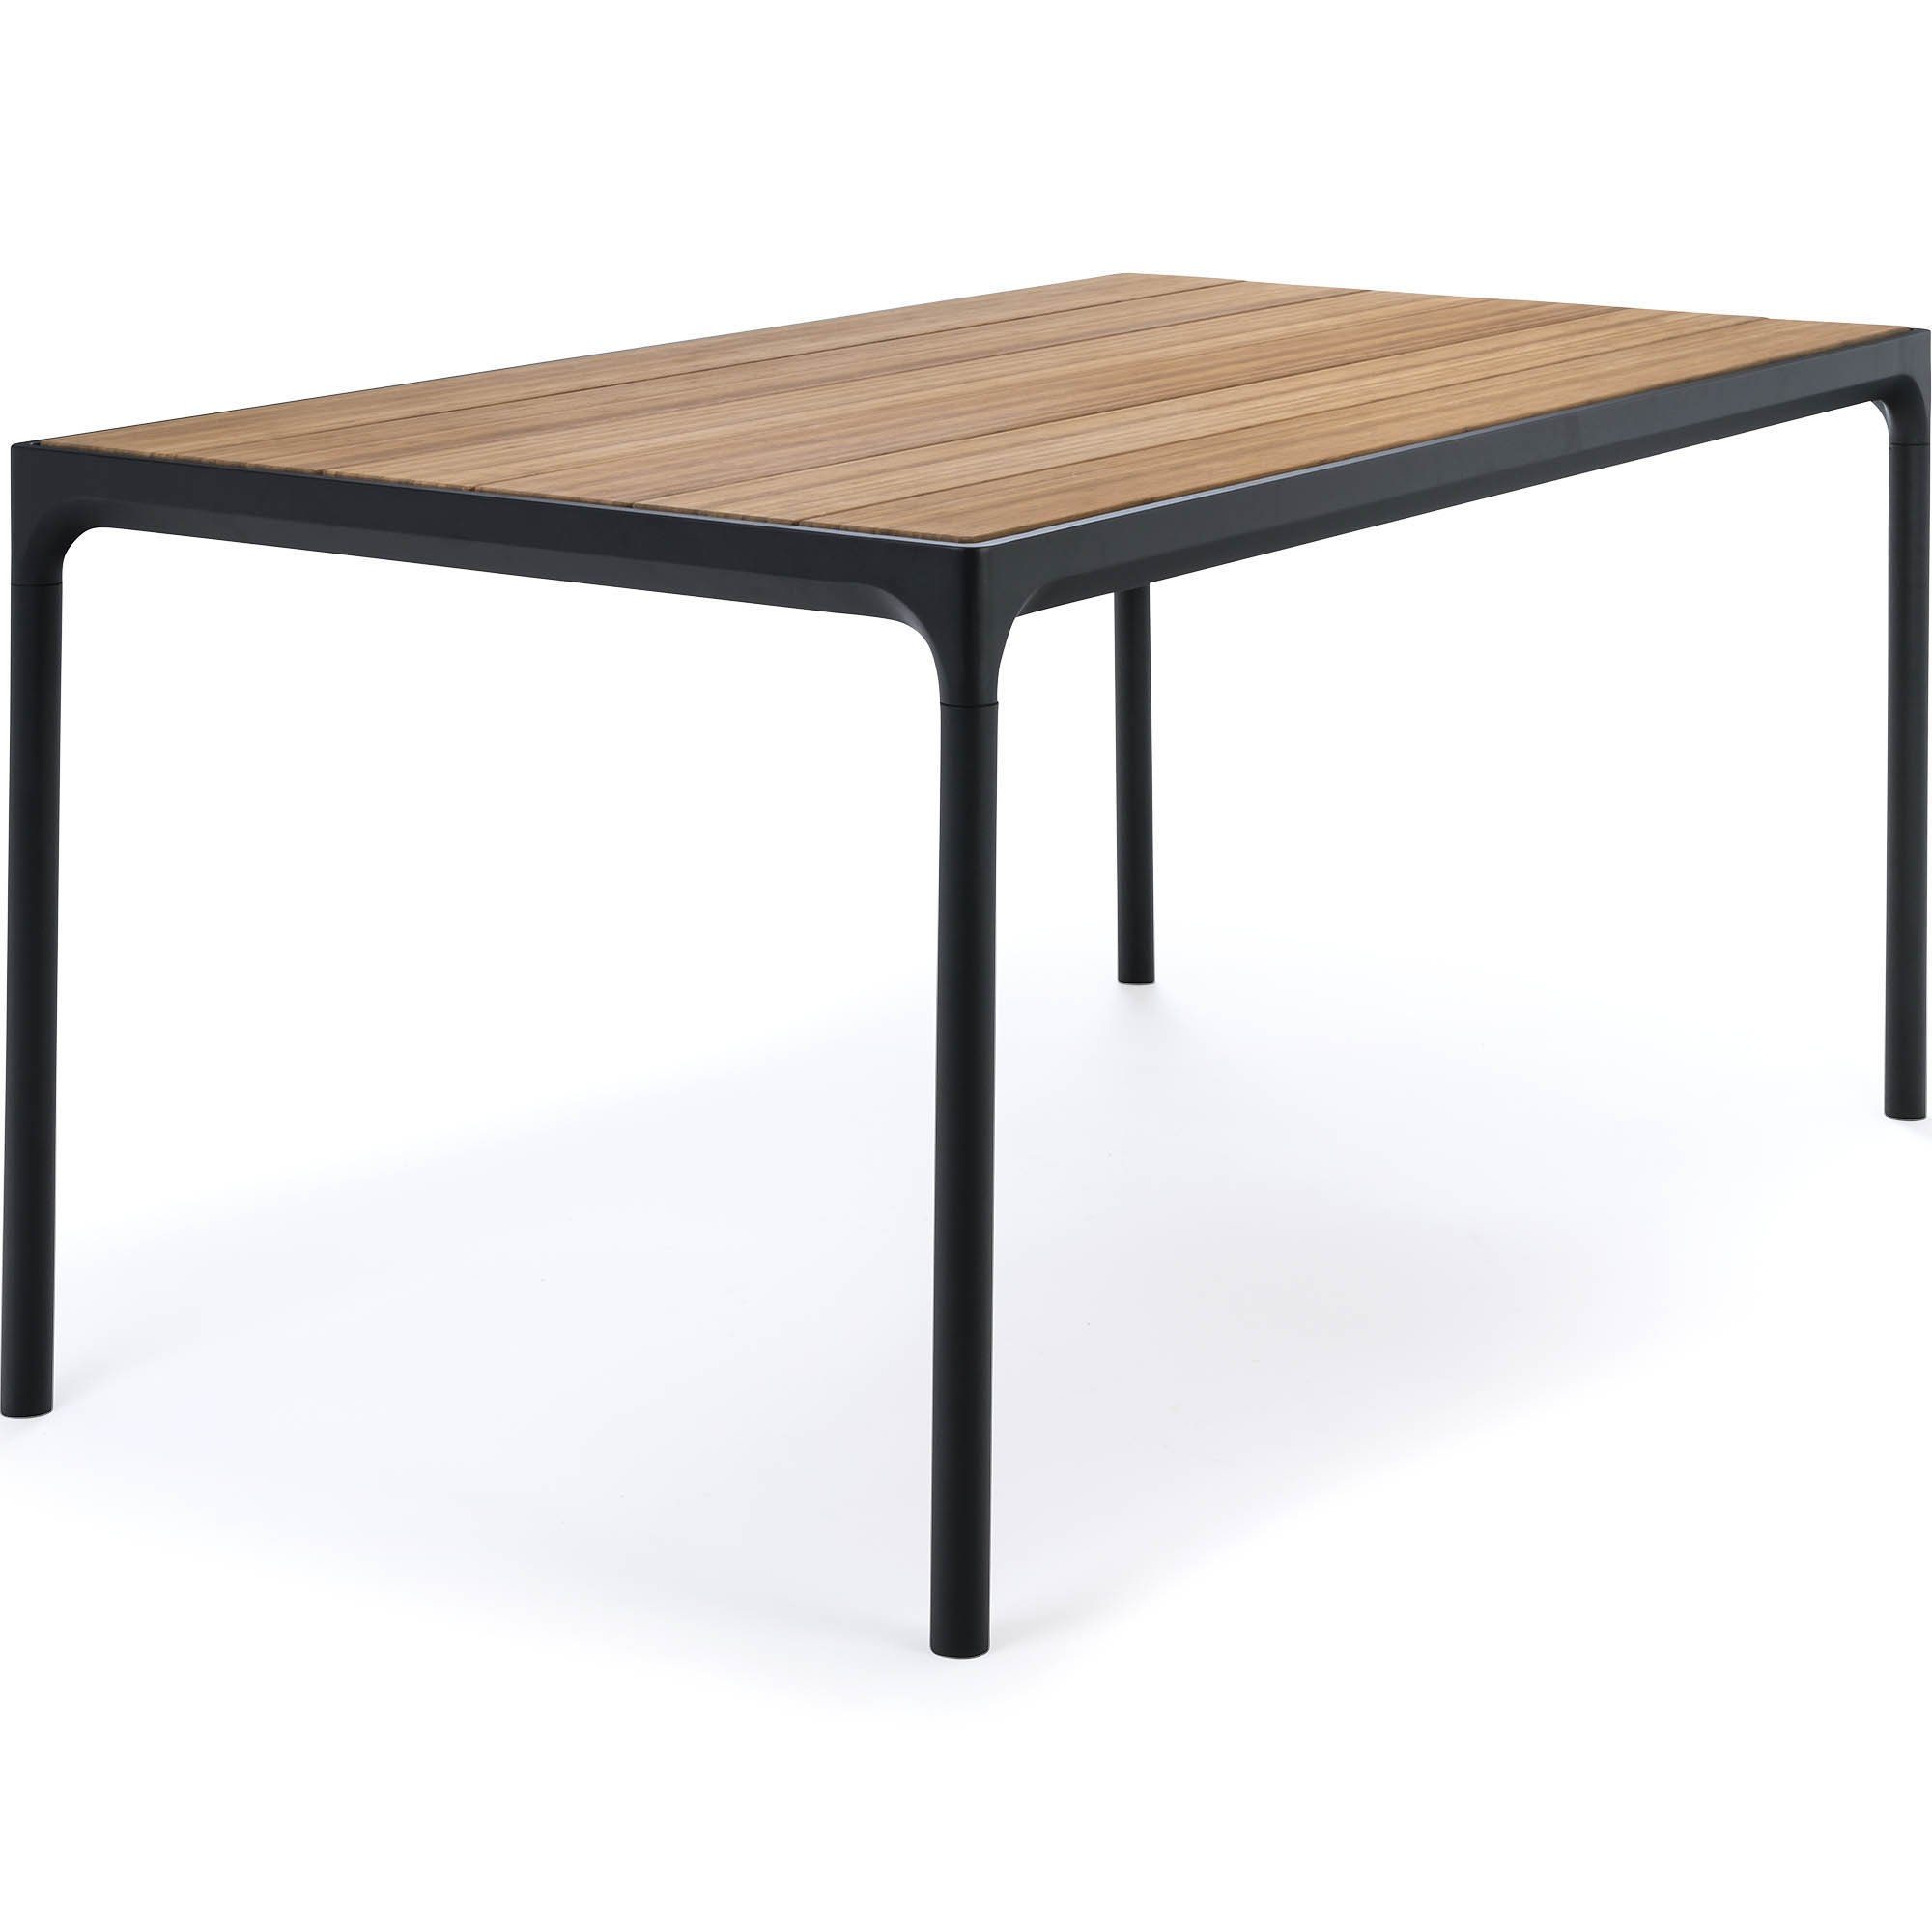 Four bord svart/bambu 160x90 cm